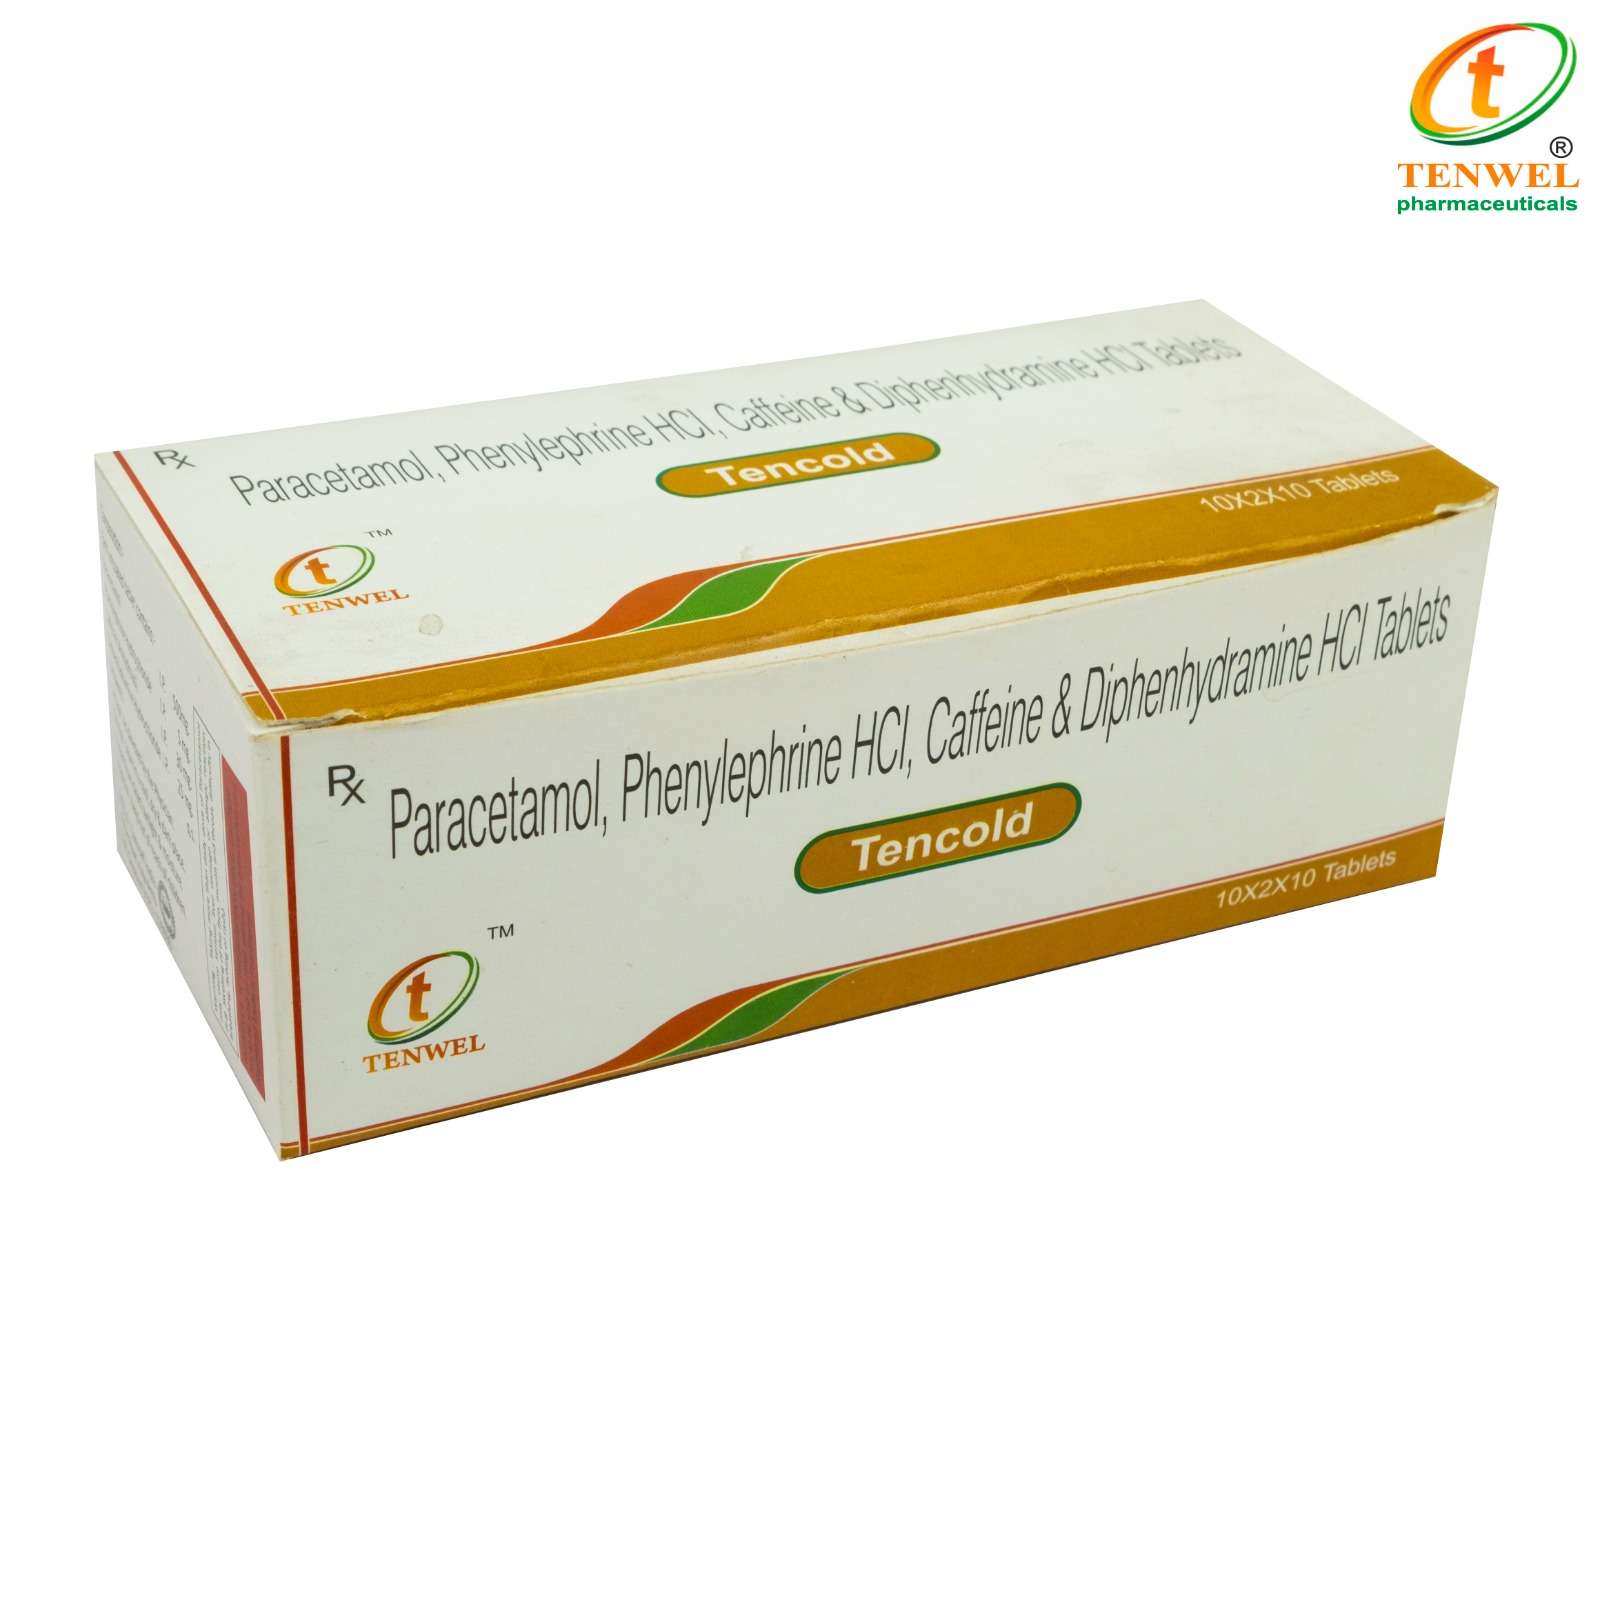 paracetamol 500mg + phenylephrine 5mg + diphenhydramine 25mg + caffeine 30mg